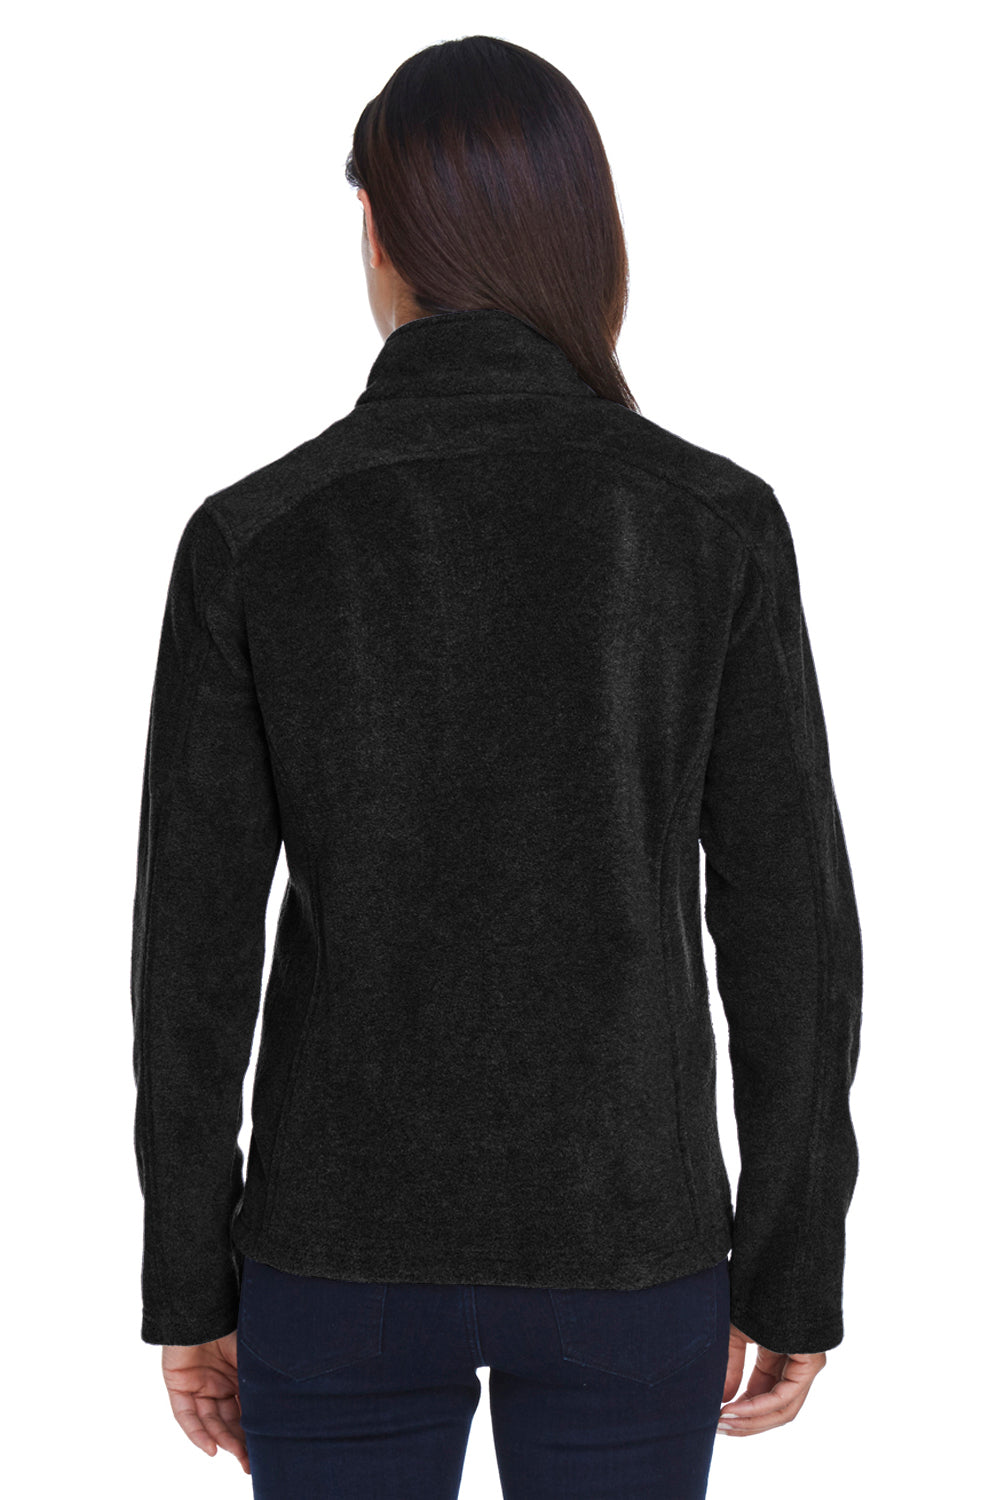 Core 365 78190 Womens Journey Full Zip Fleece Jacket Black Back